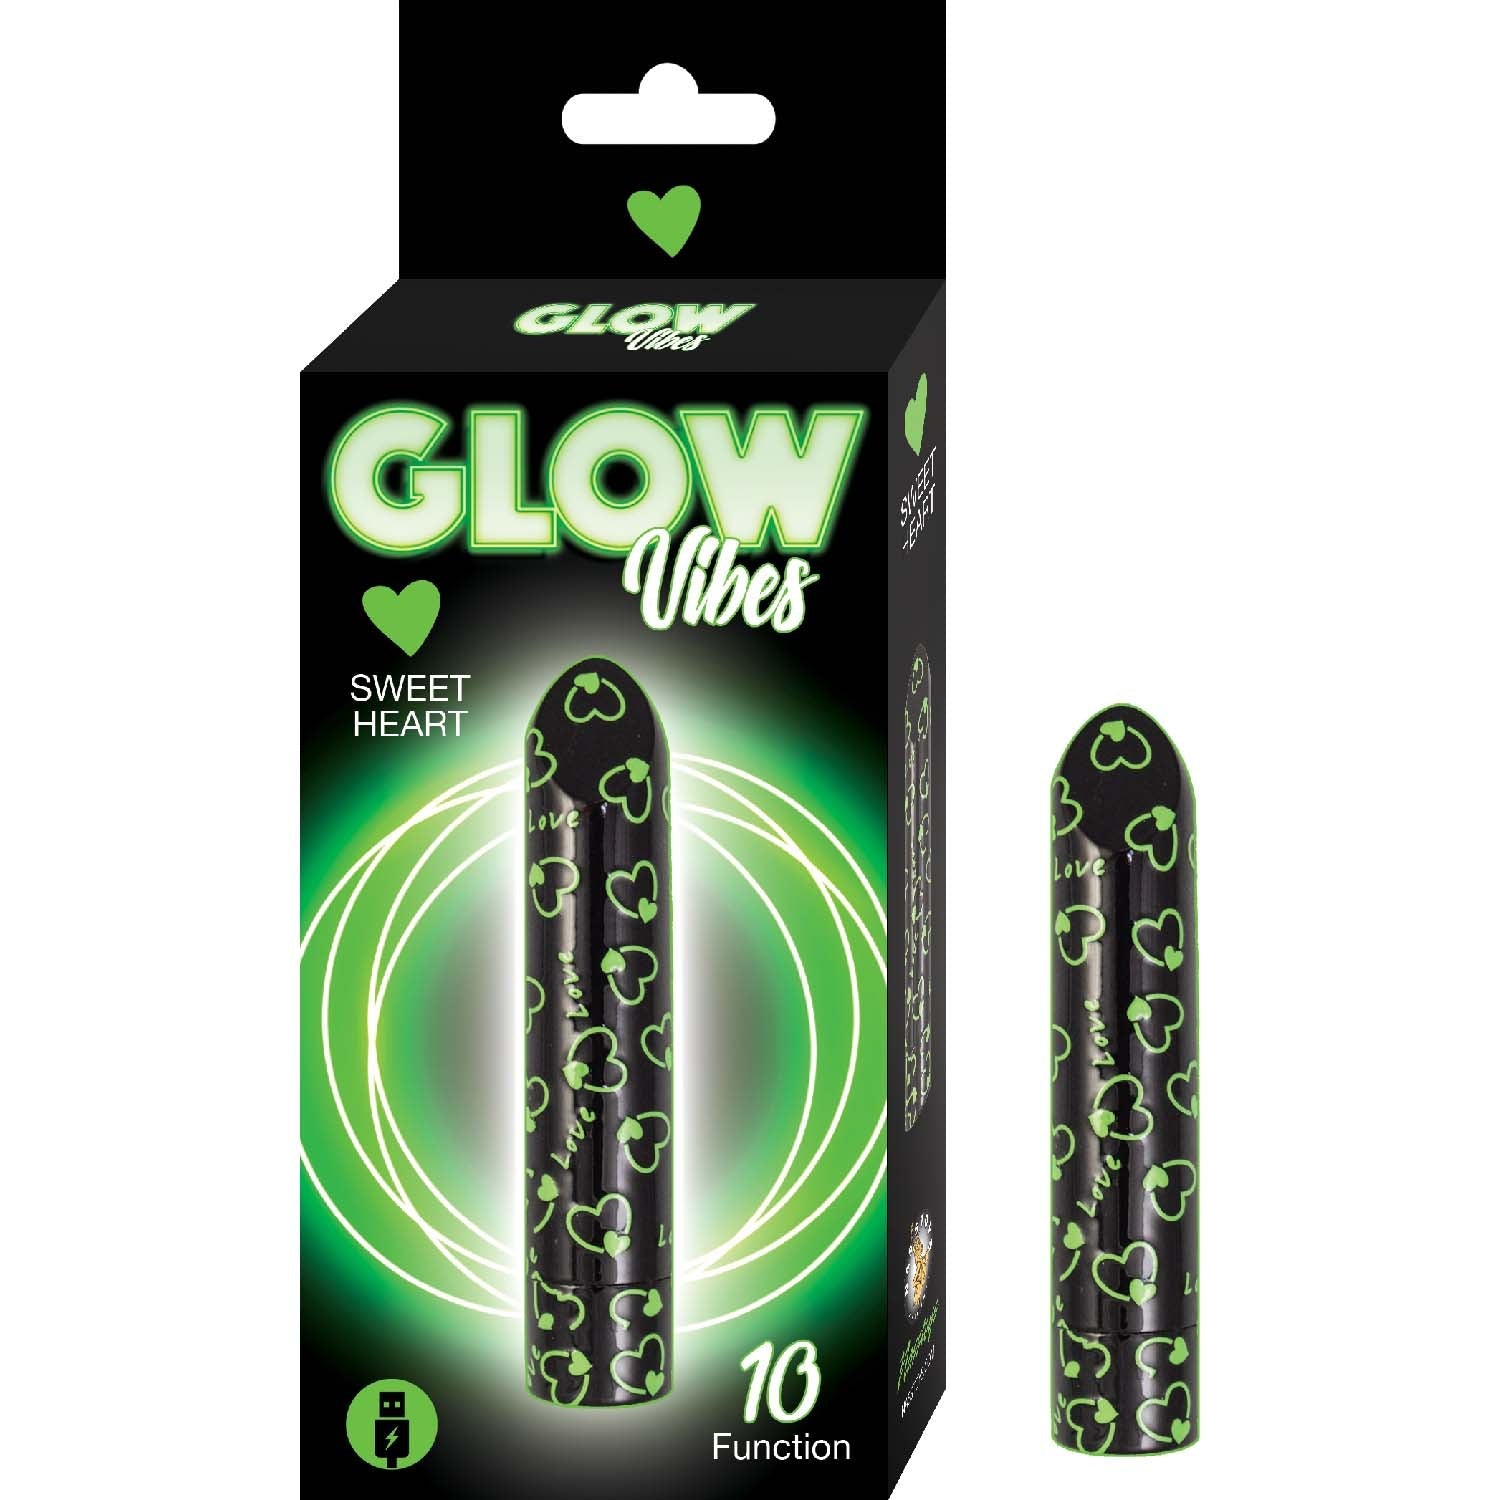 Glow Vibes - Sweet Heart | CheapLubes.com